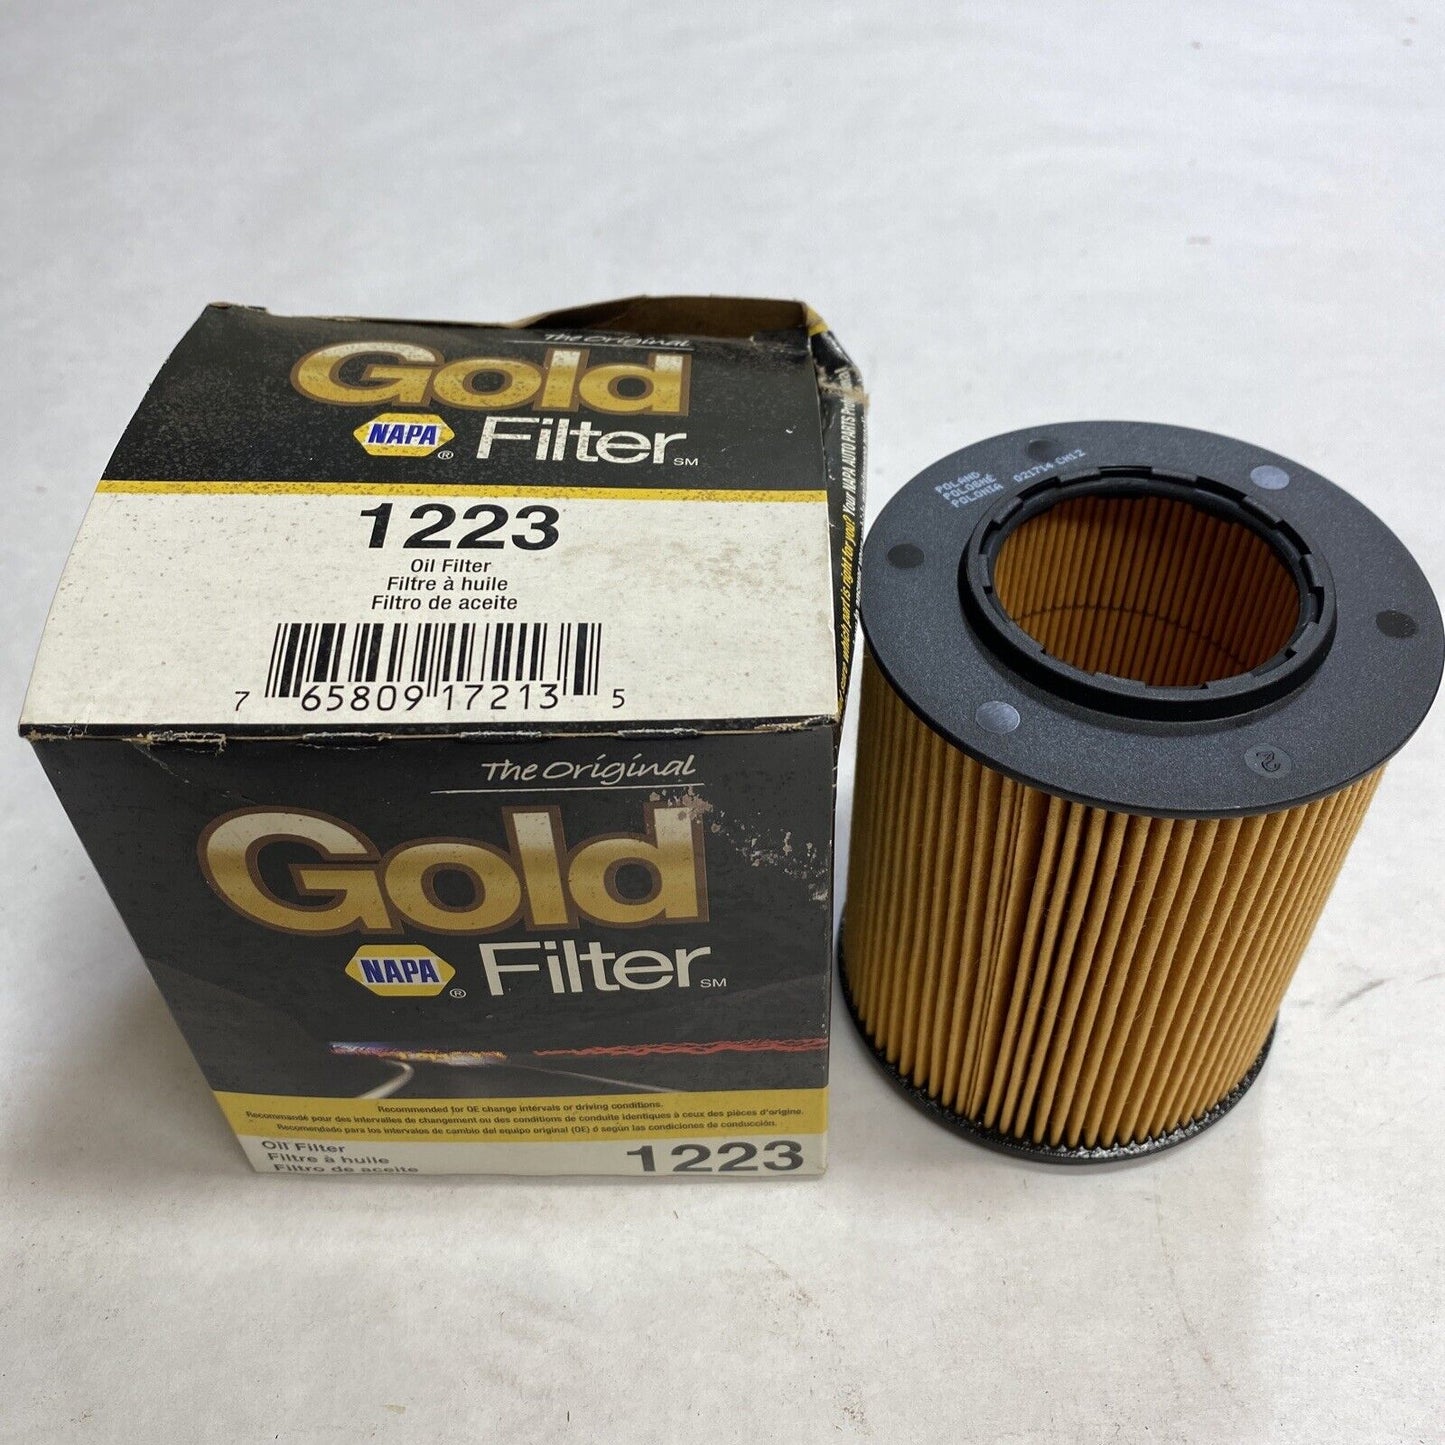 1223 NAPA Gold Oil Filter new in box